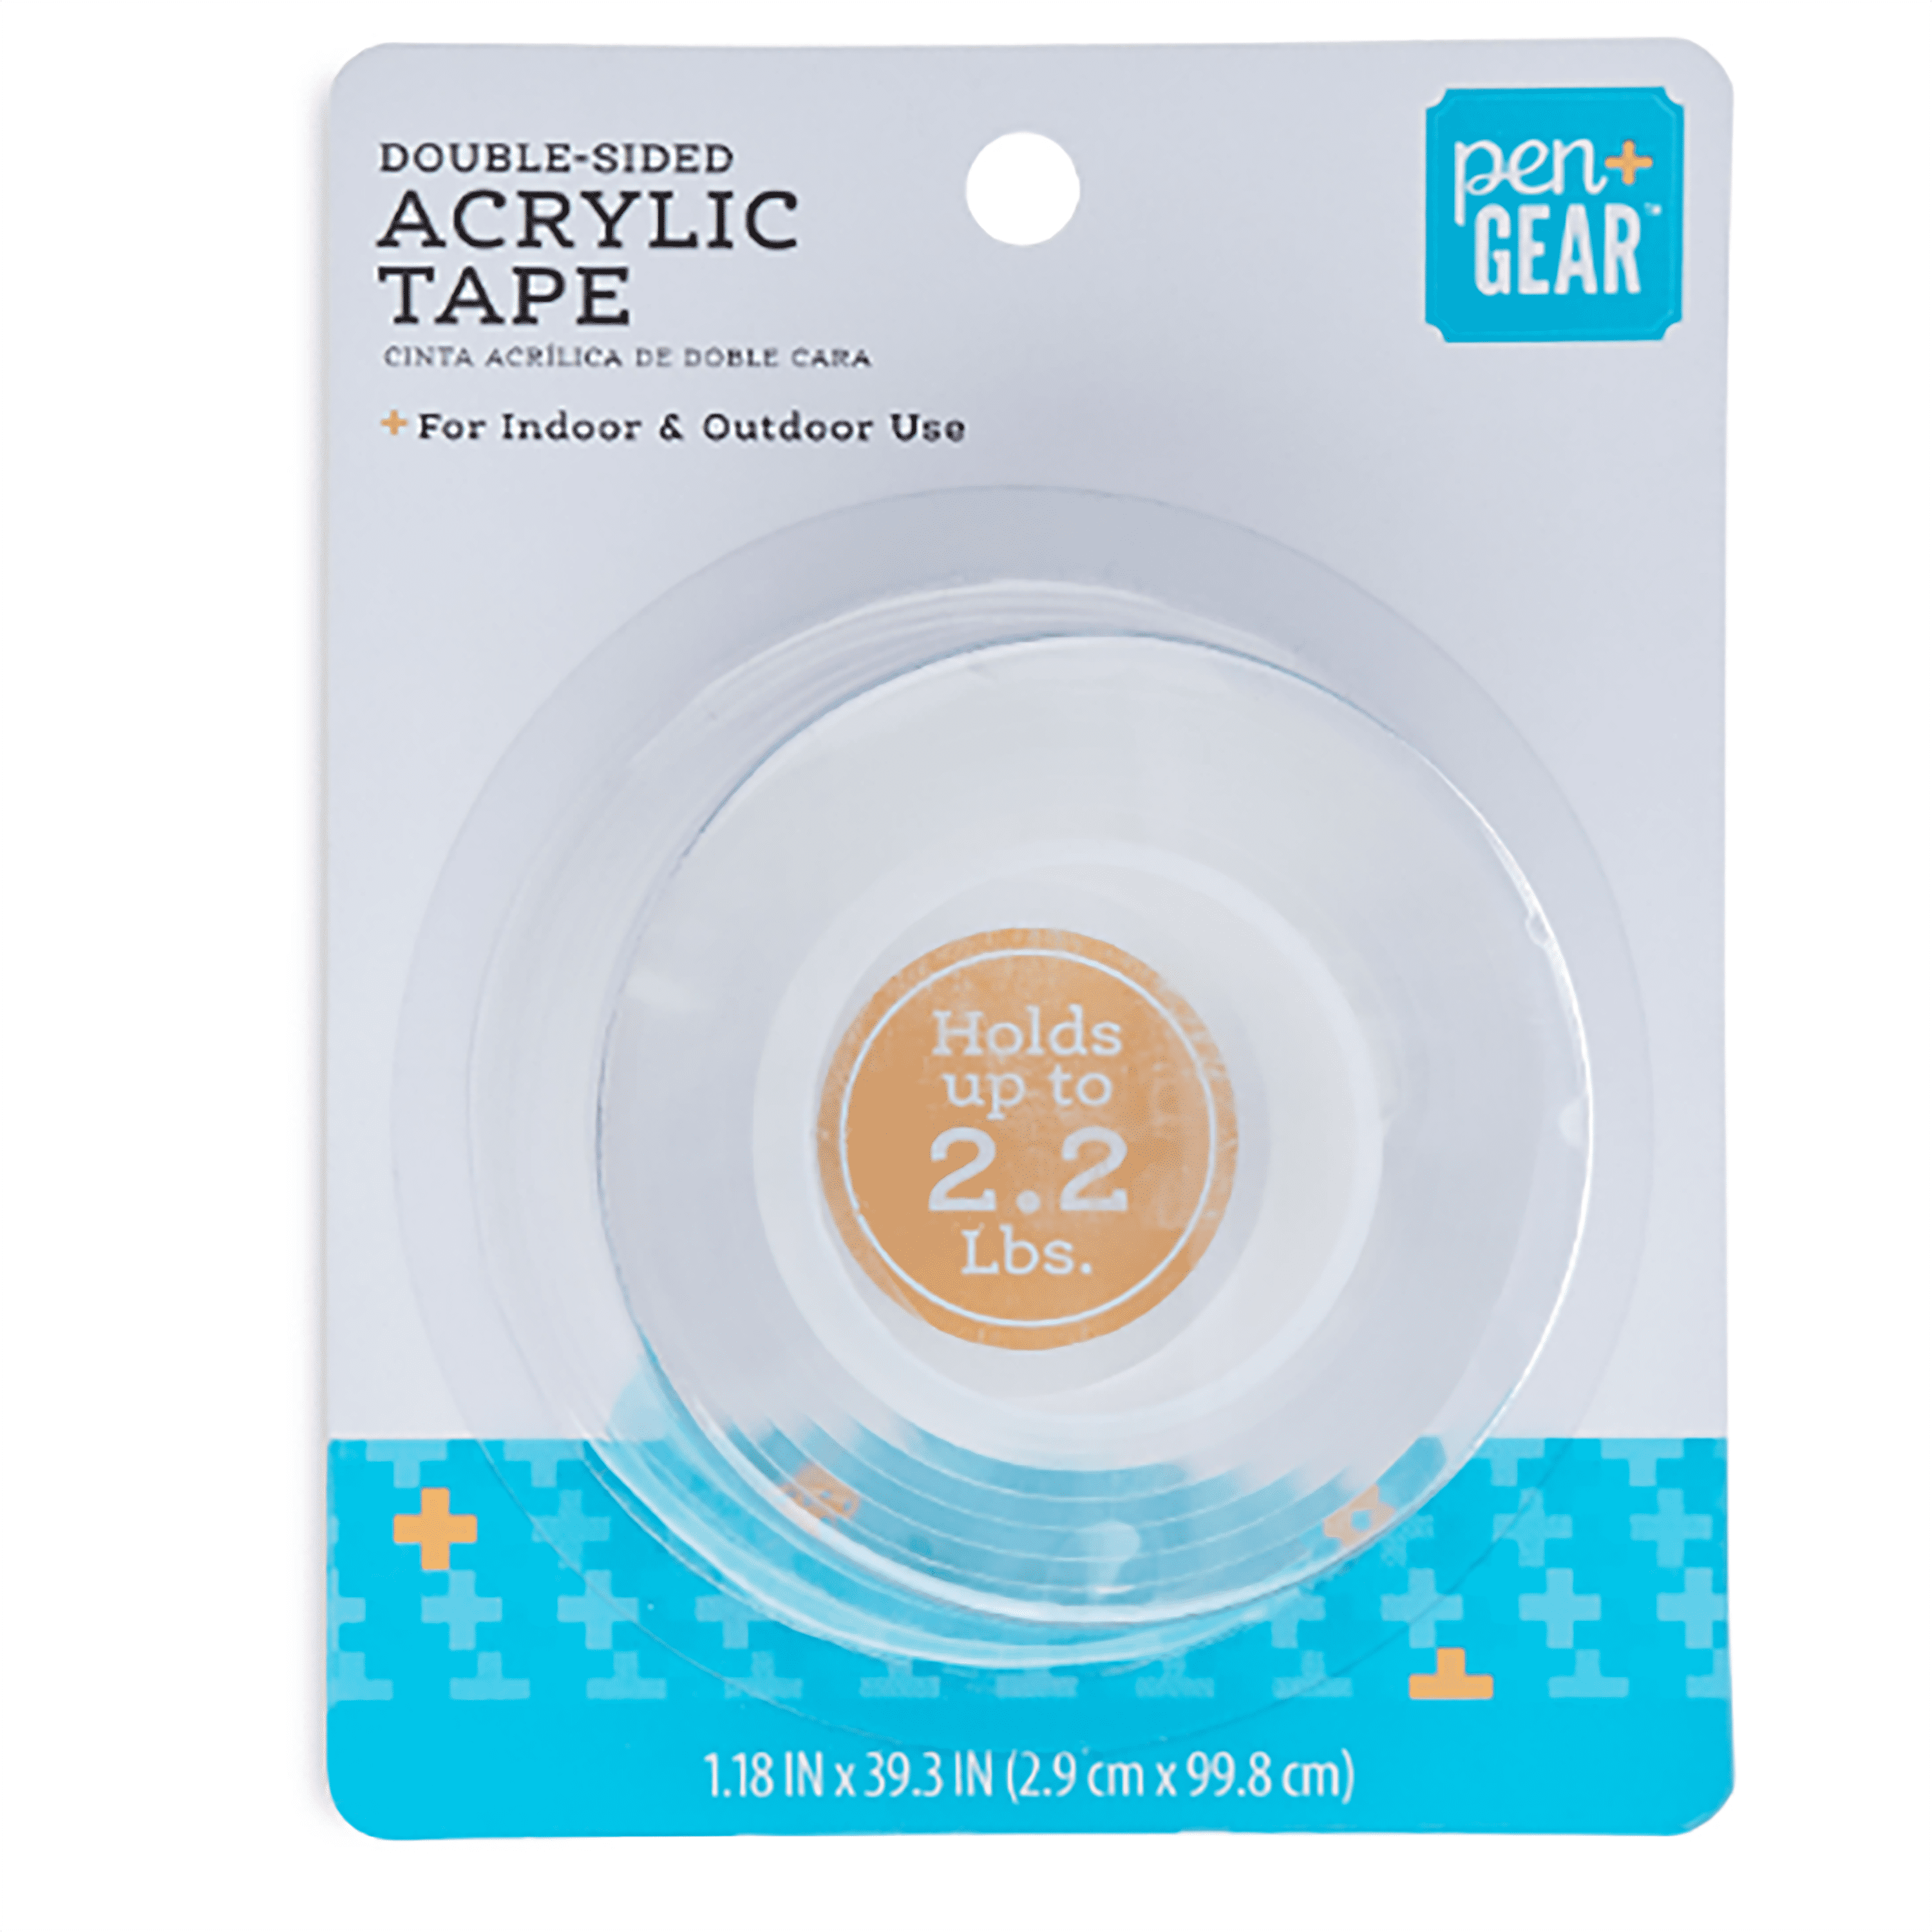 PET Double Sided Tape w/Acrylic Adhesive - Custom Fabricating